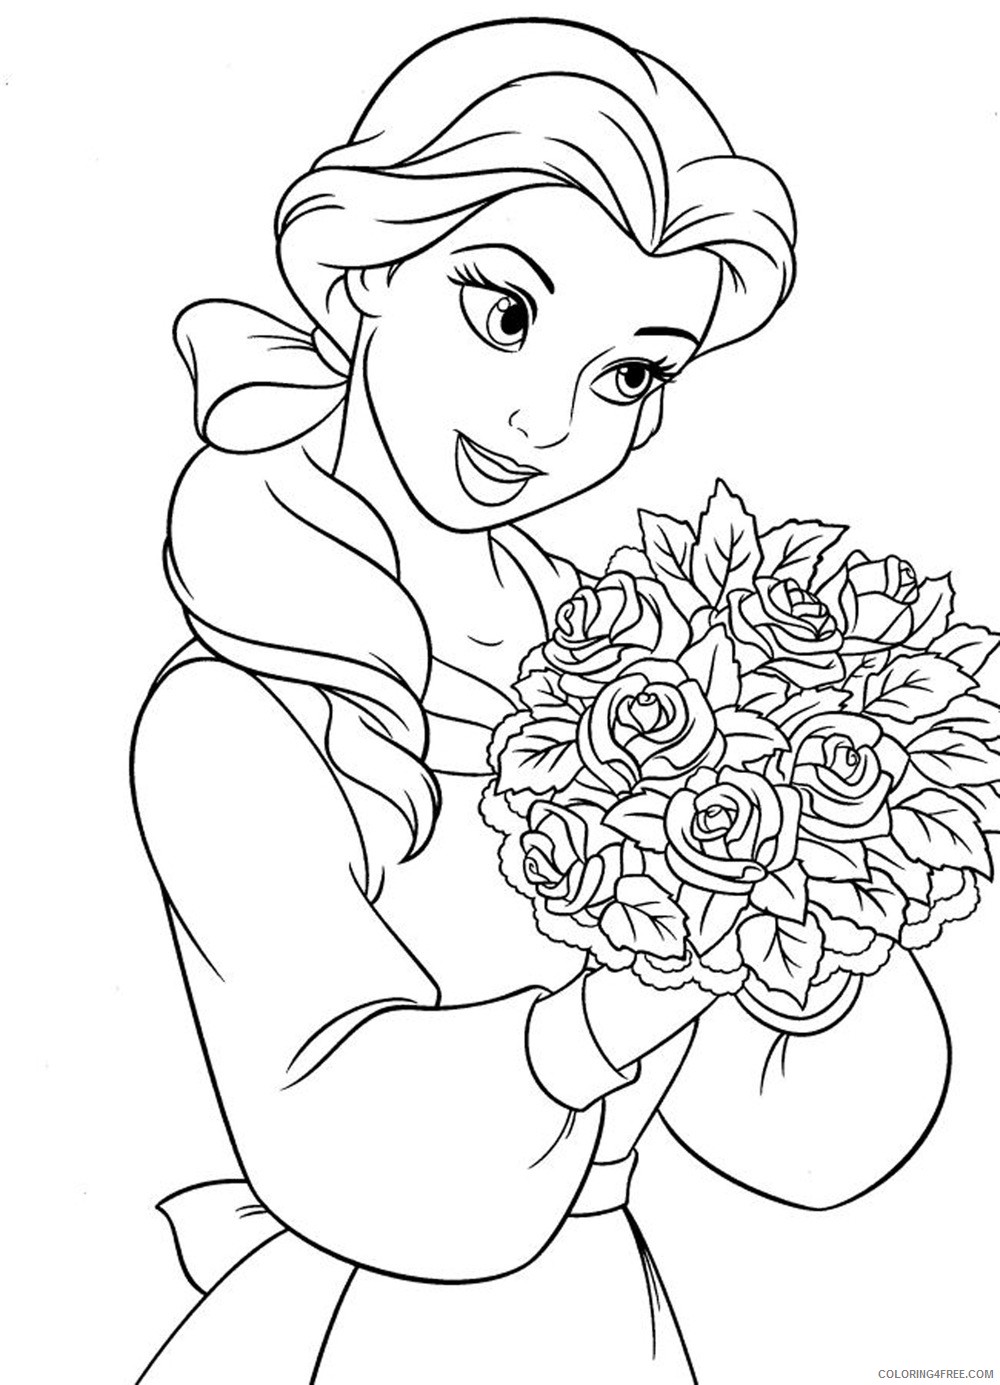 Disney Princess Coloring Pages Cartoons Disney Princess Tiana Printable 2020 2415 Coloring4free